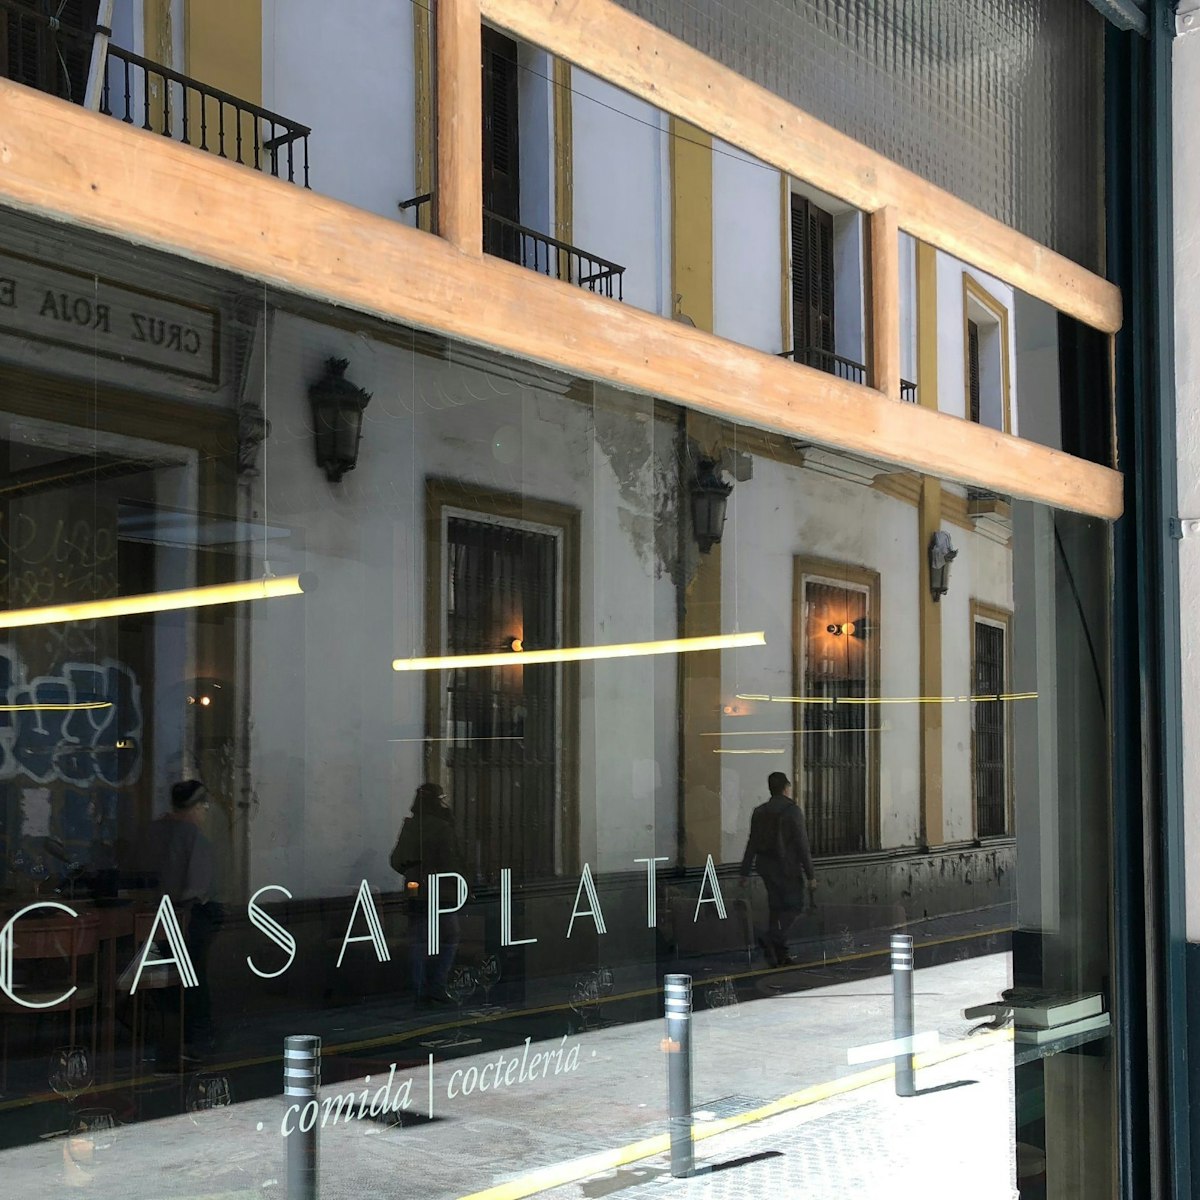 Window with restaurant name , Casaplata.